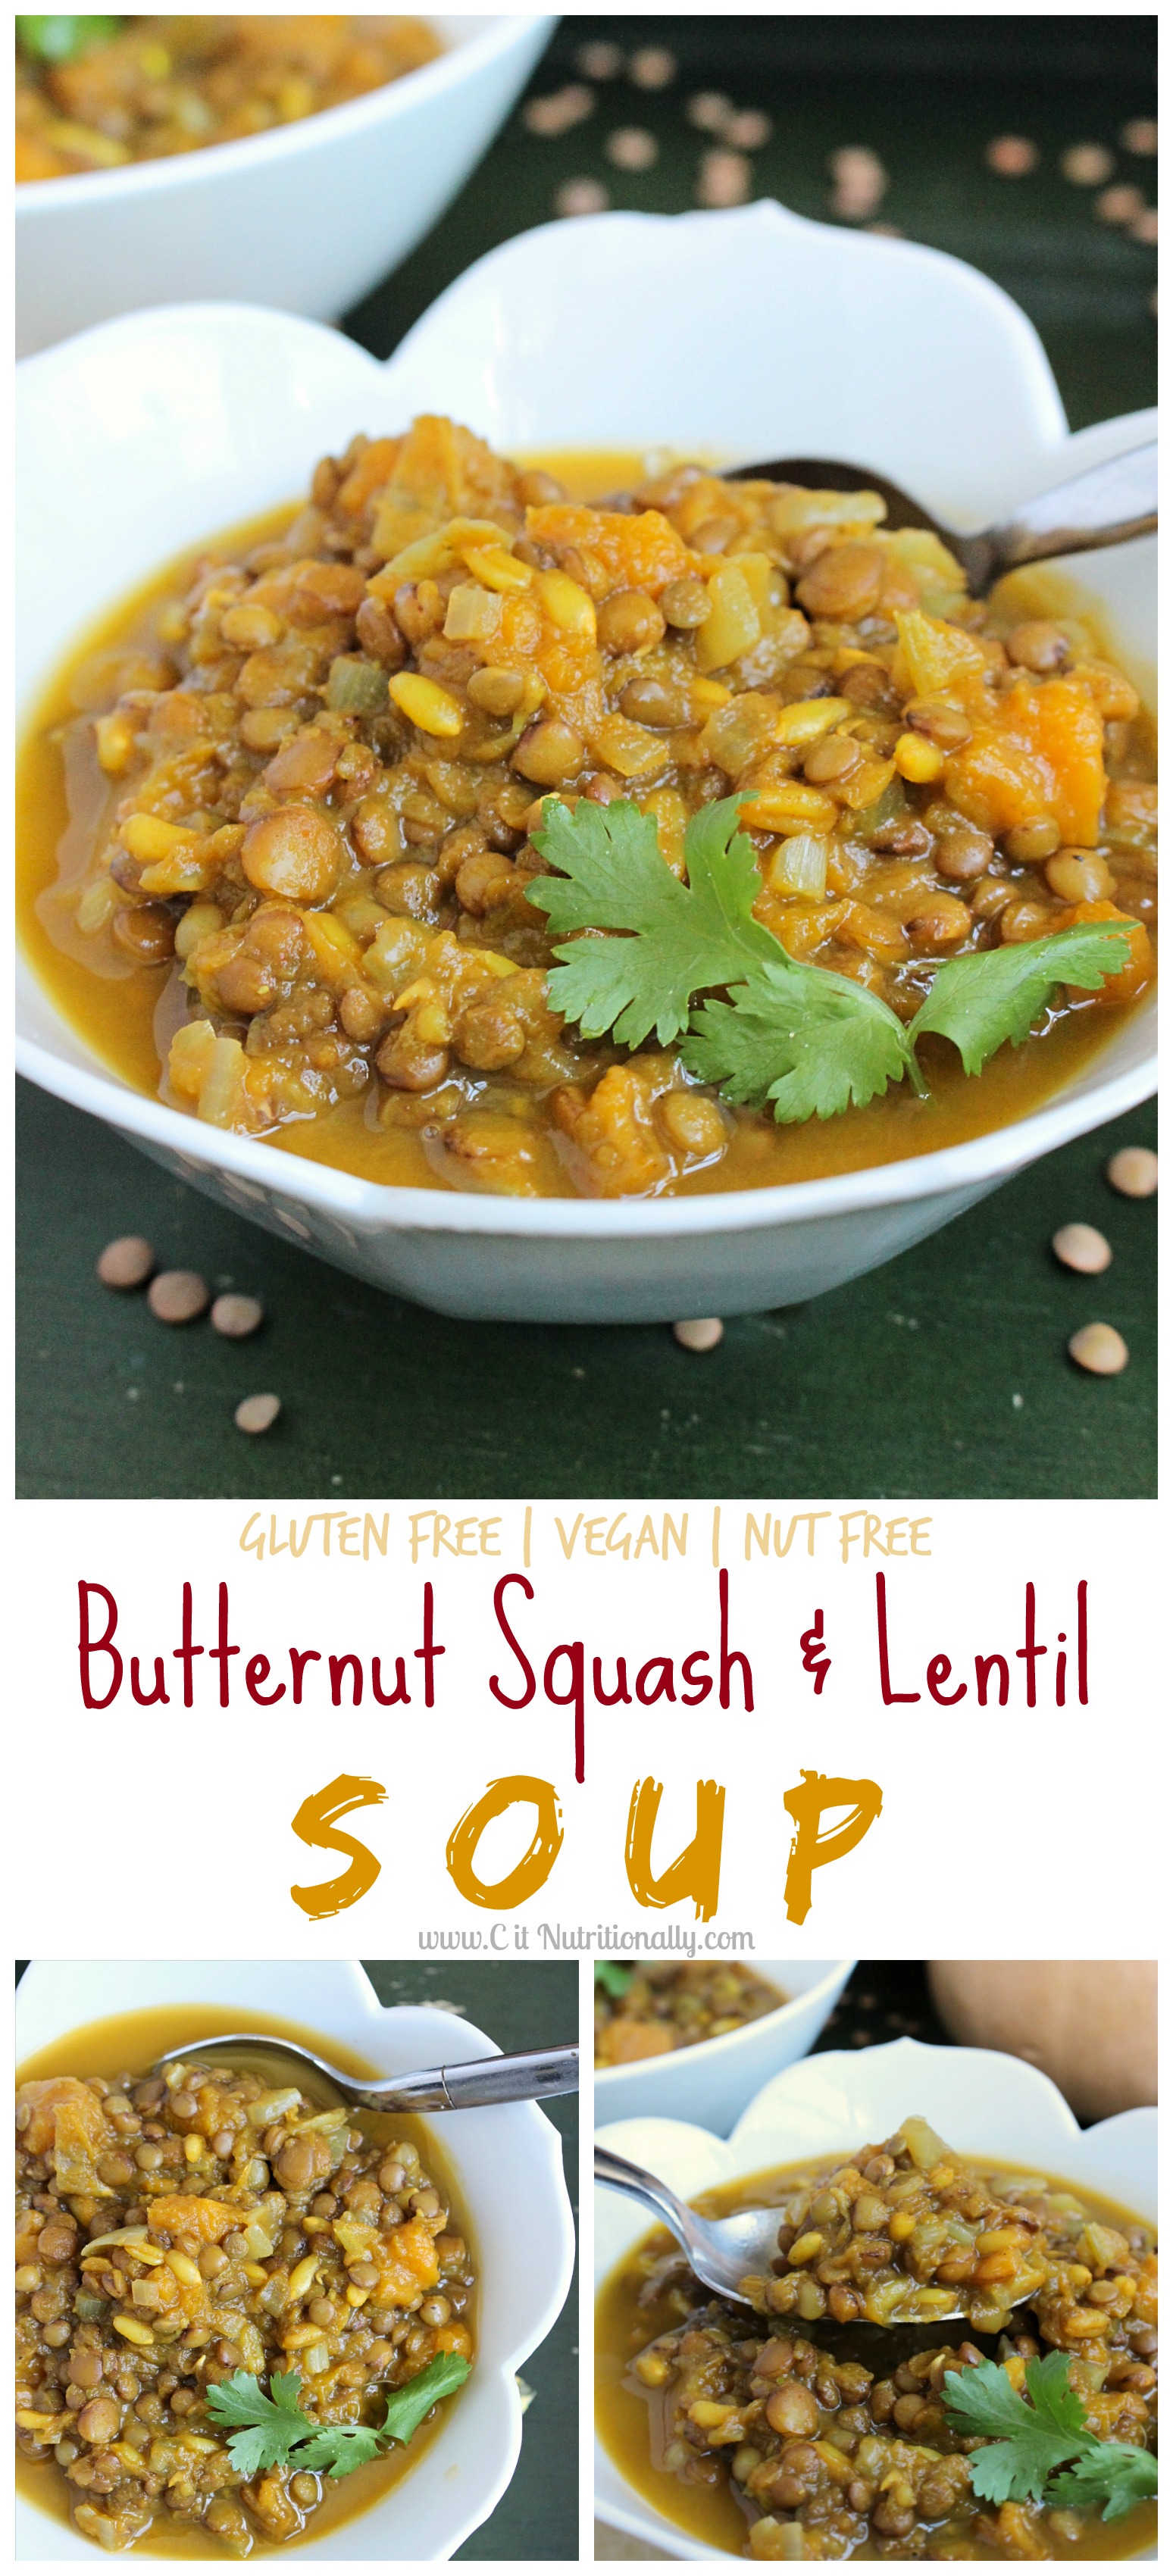 Butternut Squash and Lentil Soup | C it Nutritionally